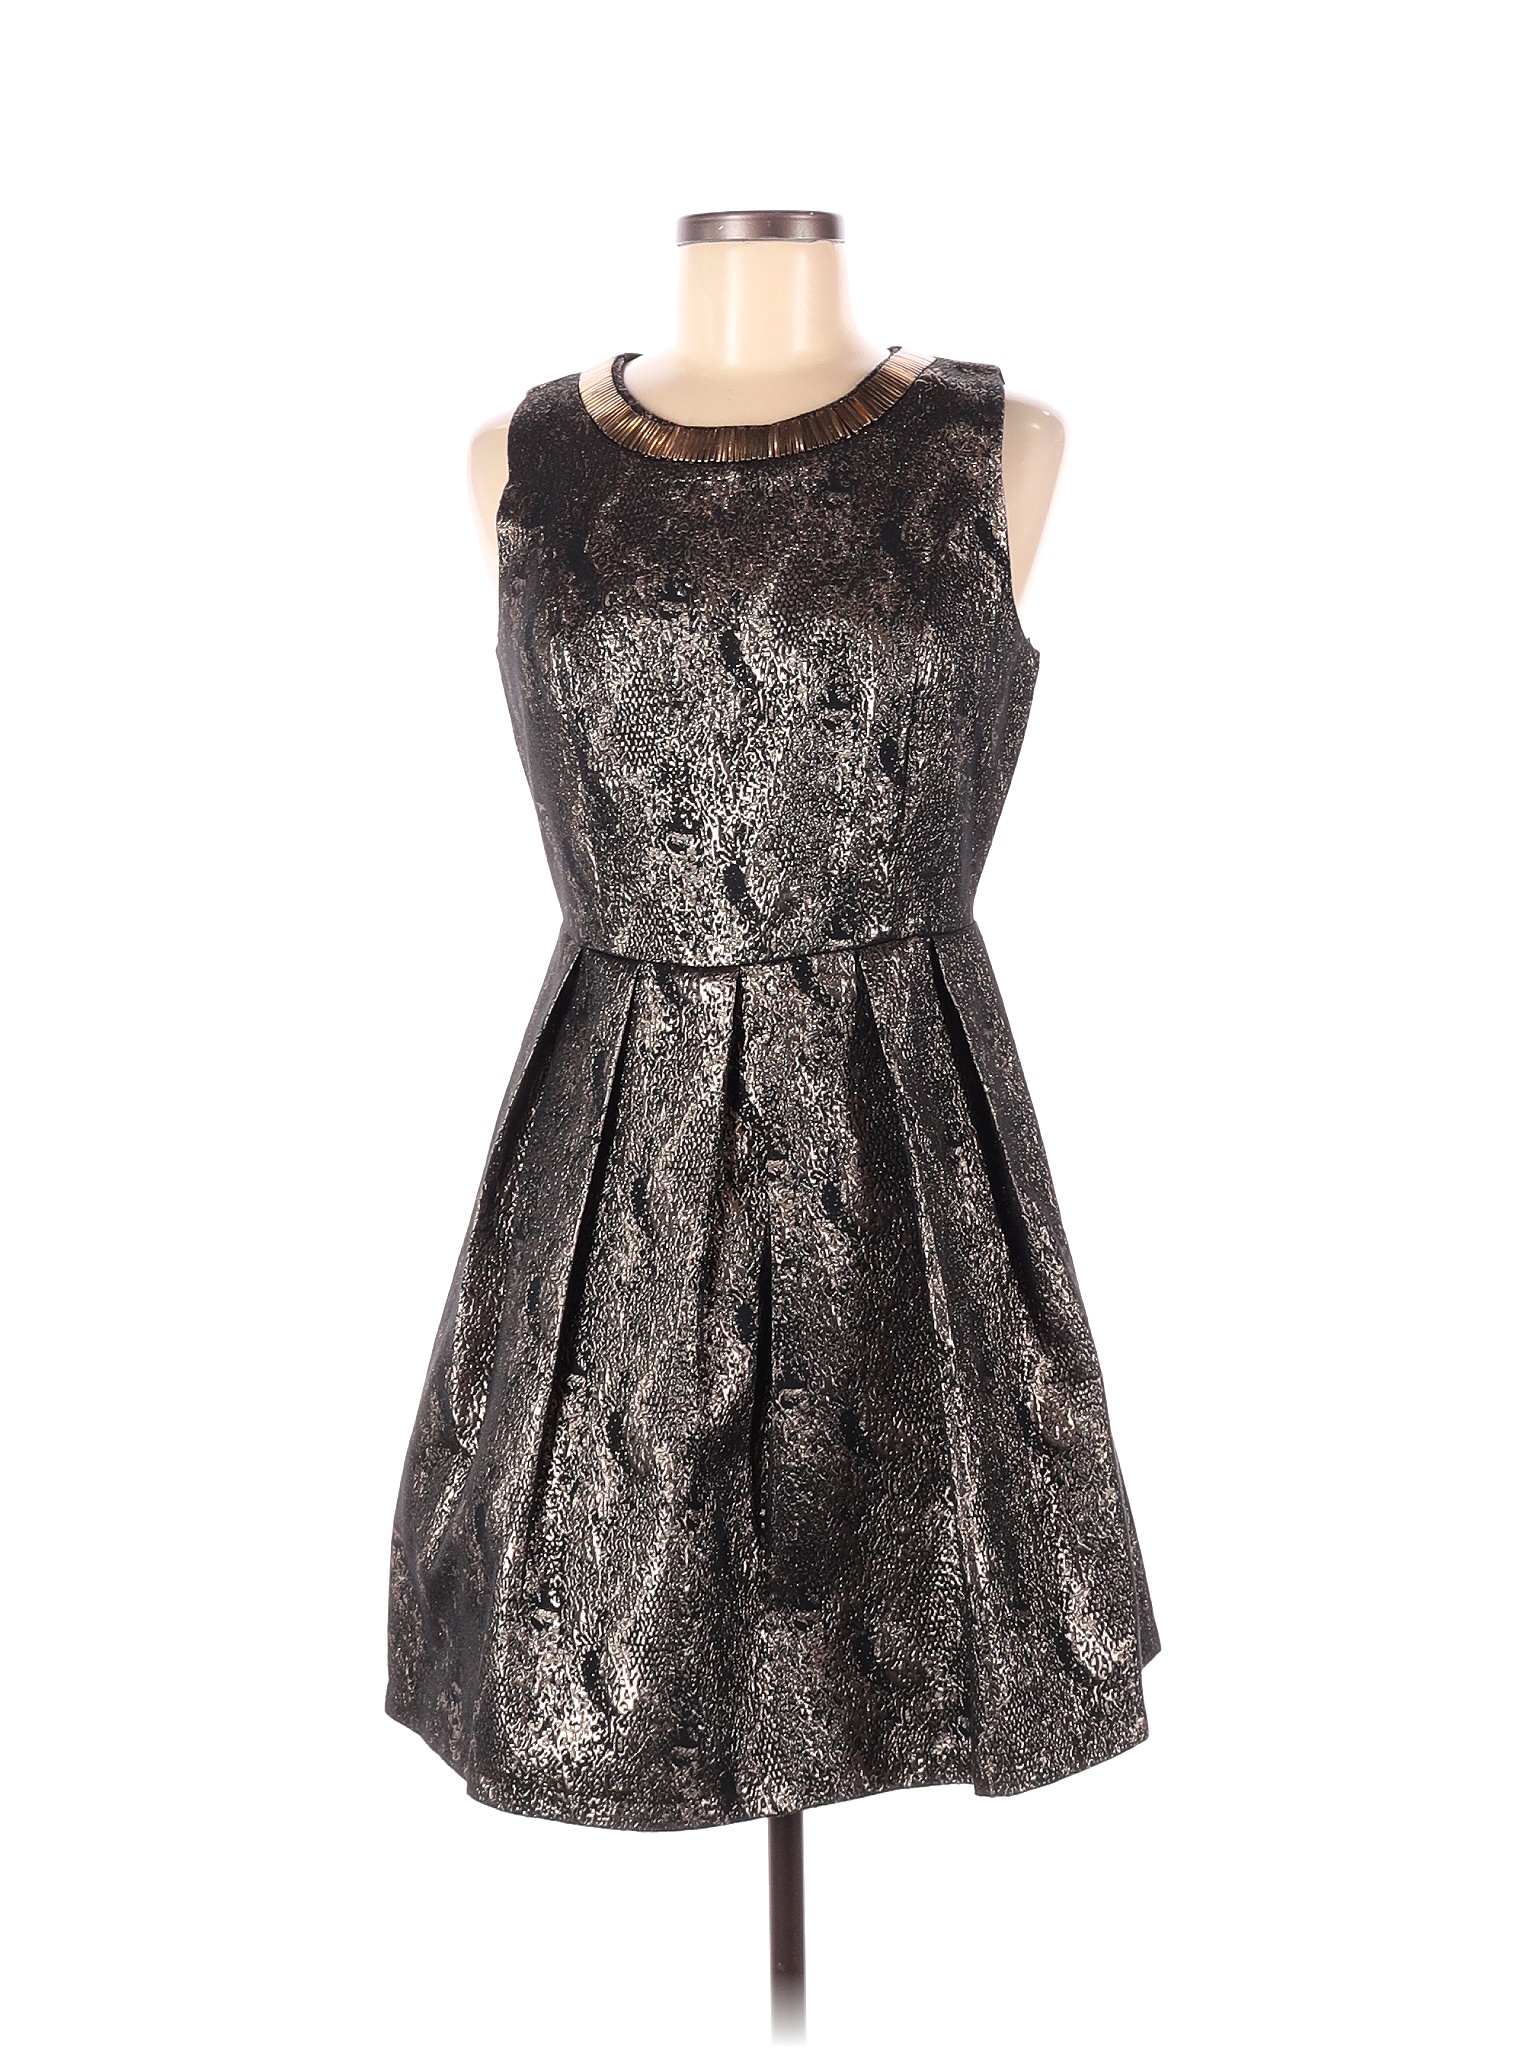 Romeo & Juliet Couture Metallic Black Cocktail Dress Size M - 79% off ...